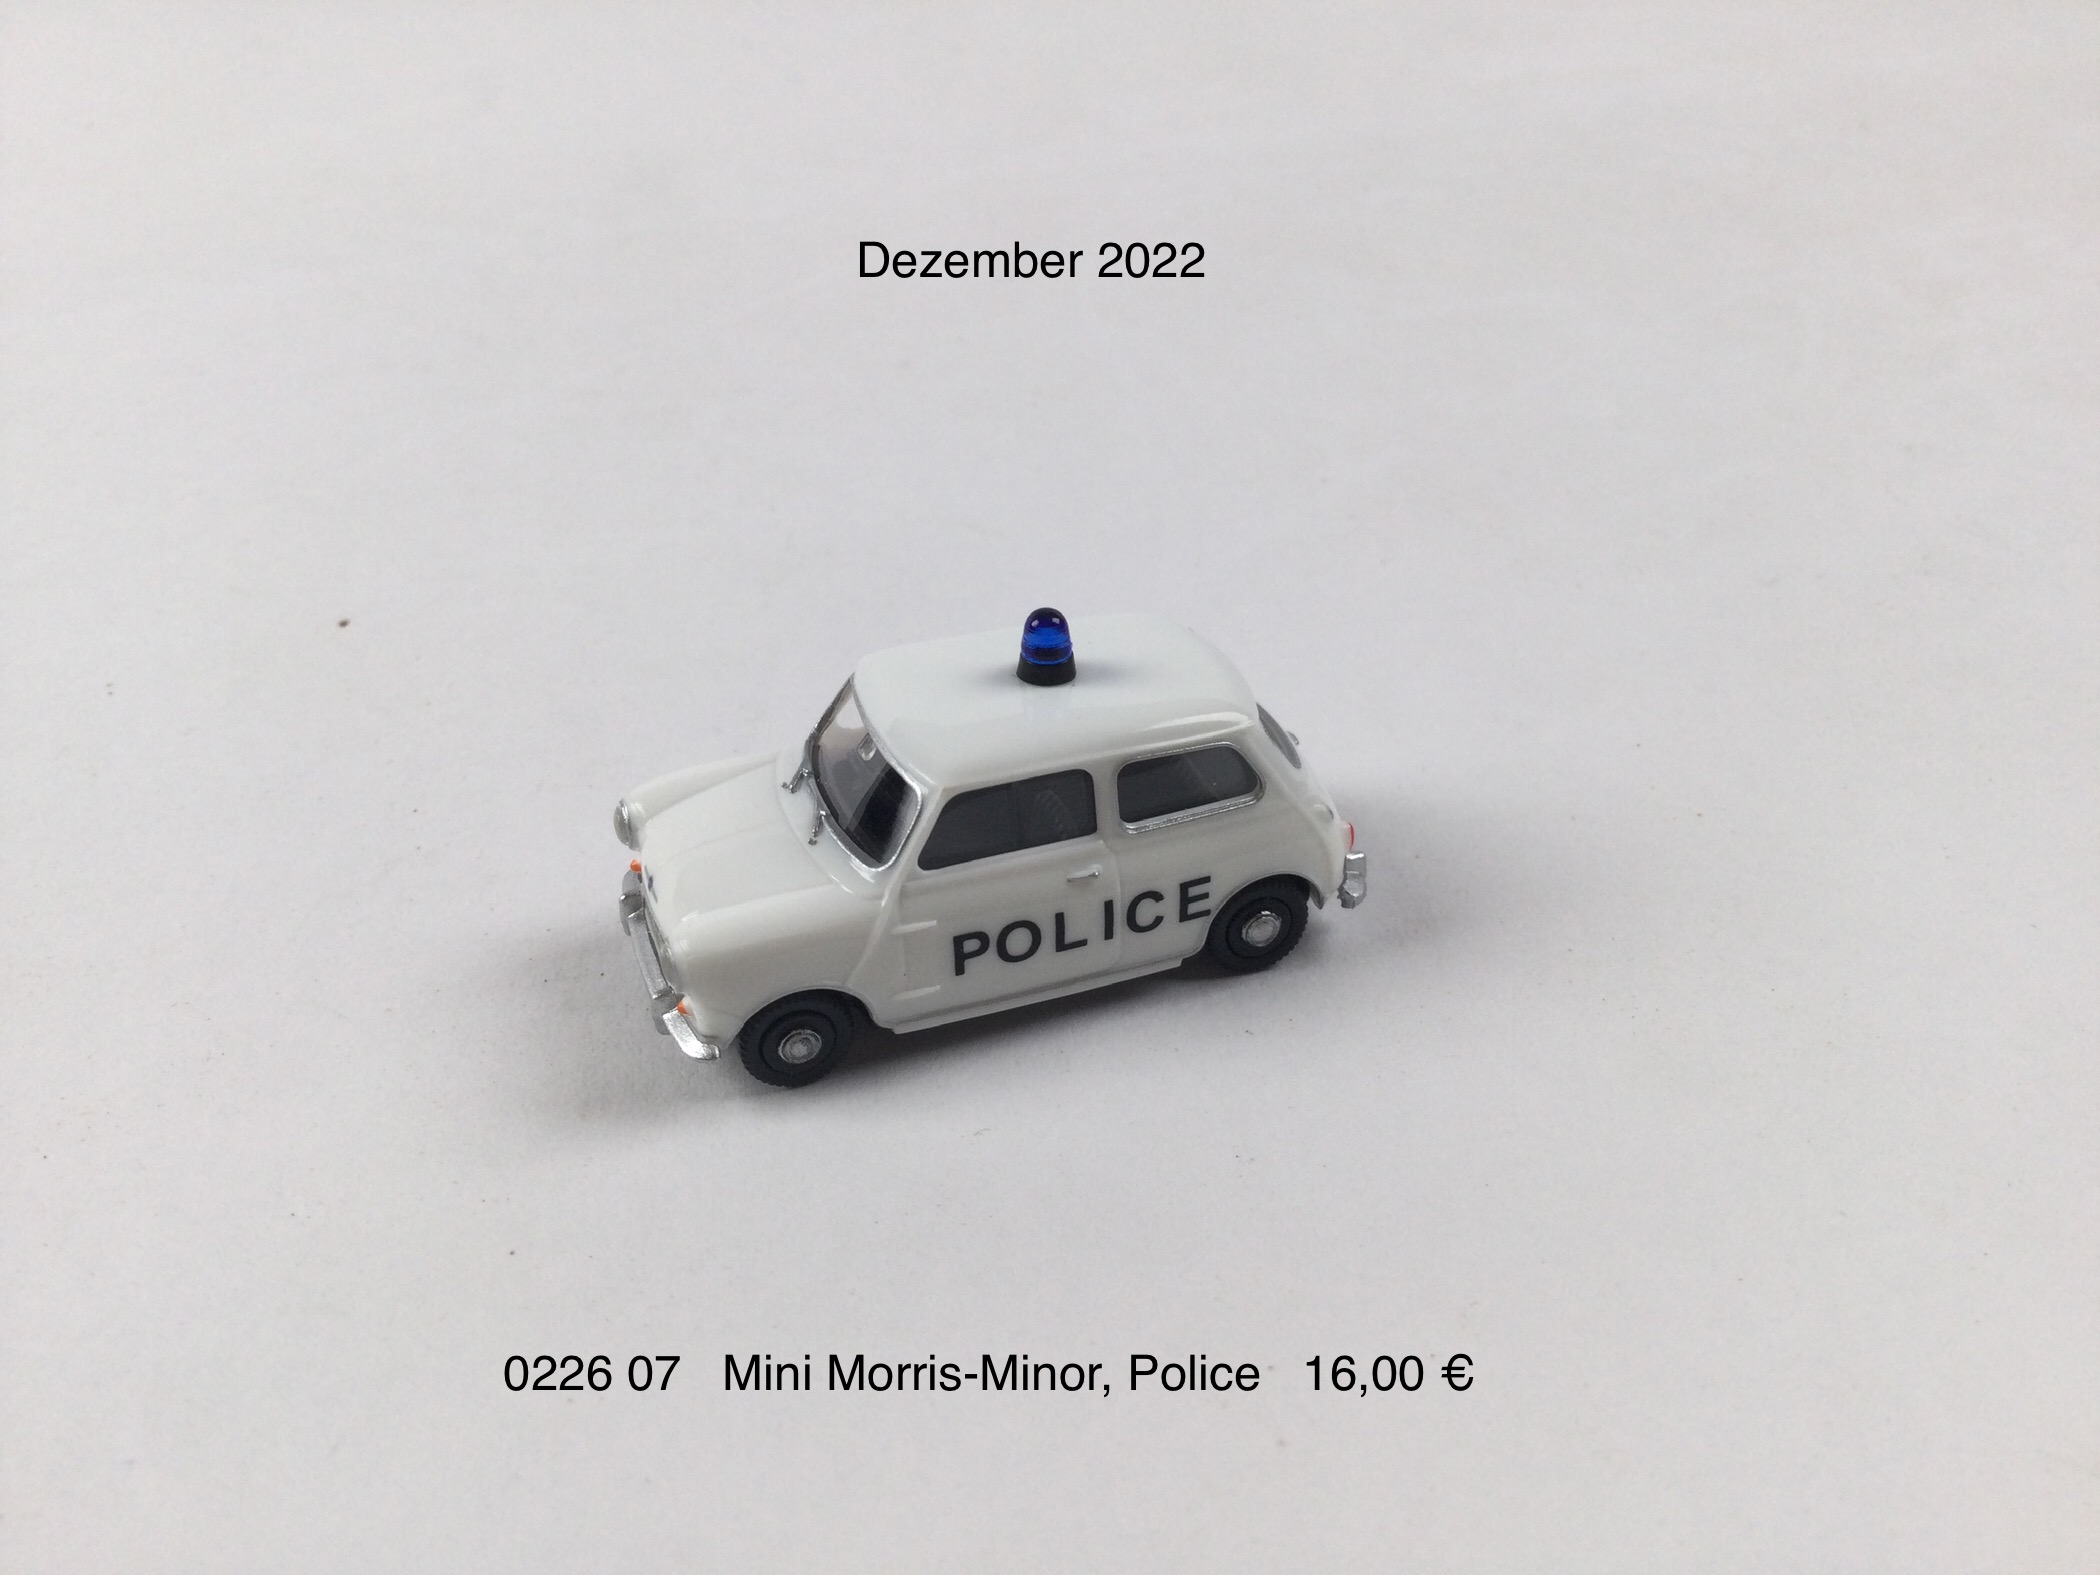 Mini Morris-Minor "Police"